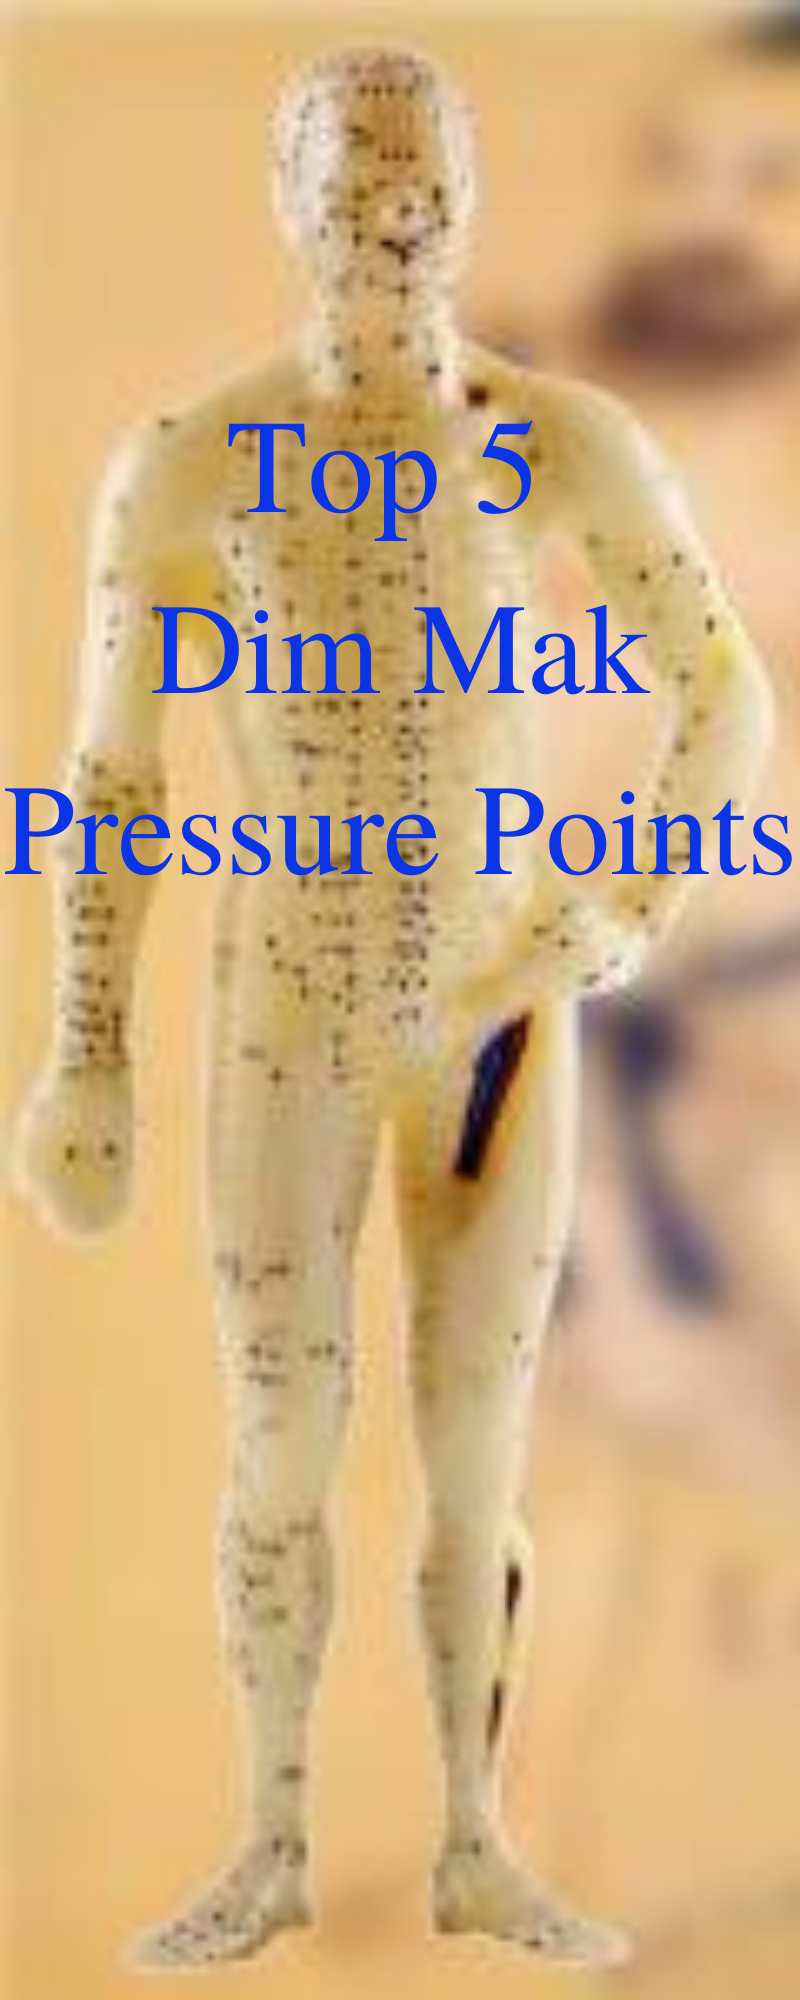 * Dim Mak Pressure Points